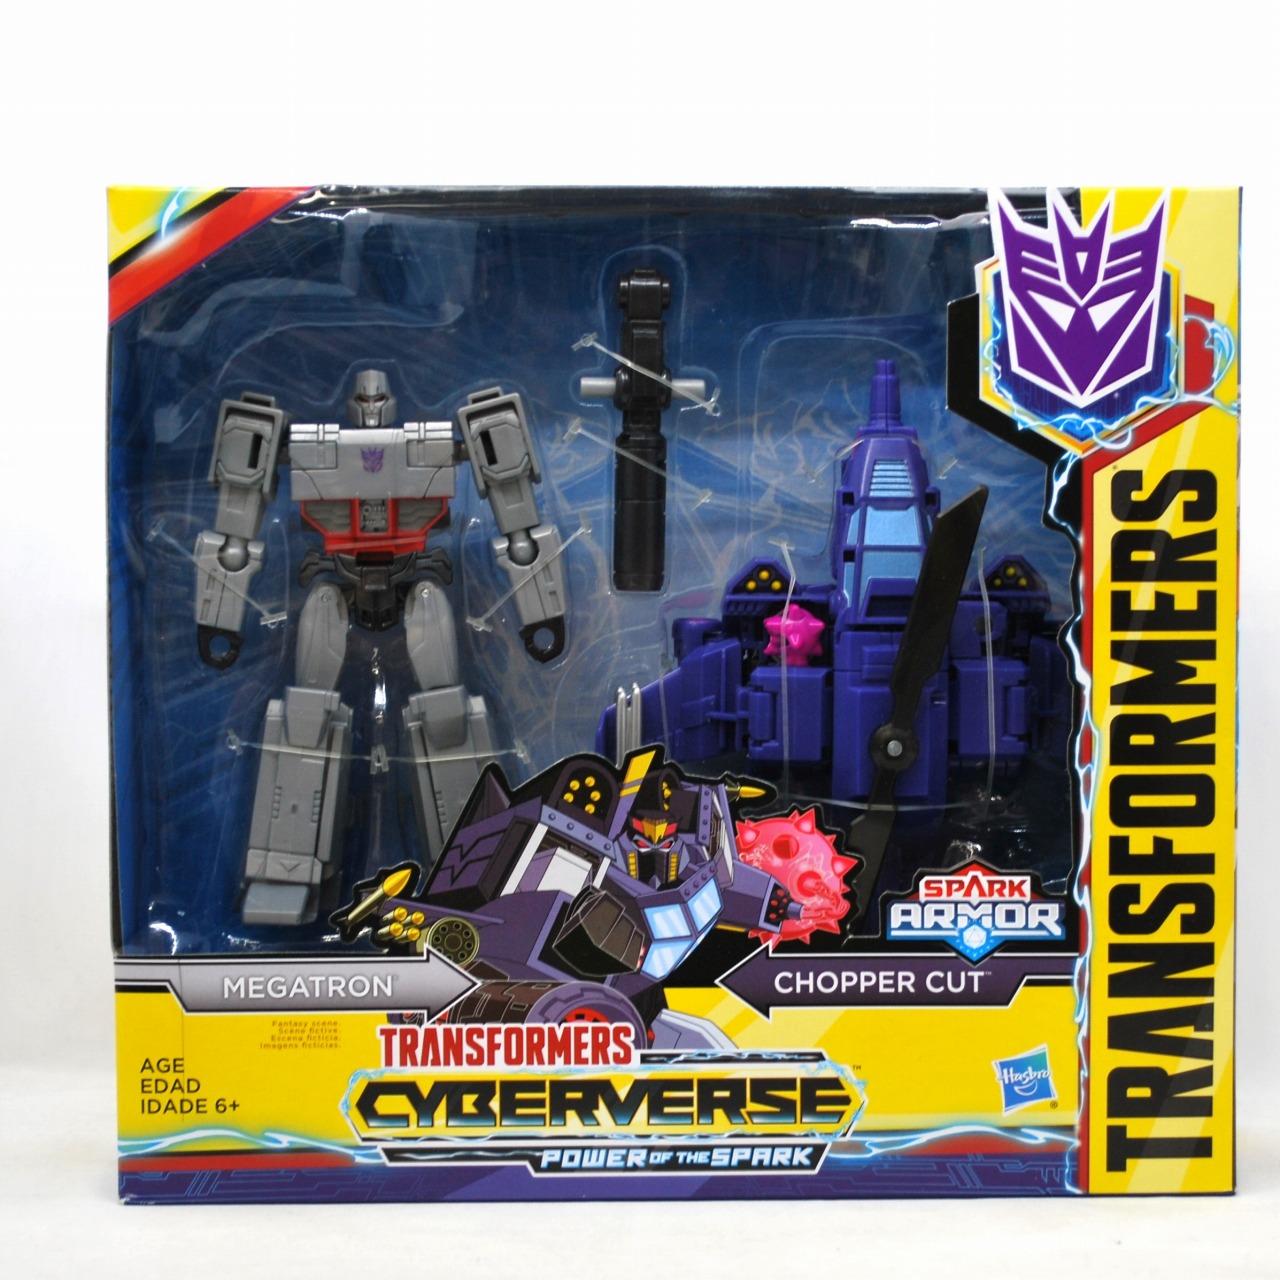 Transformers Cyberverse Megatron and Chopper Cut